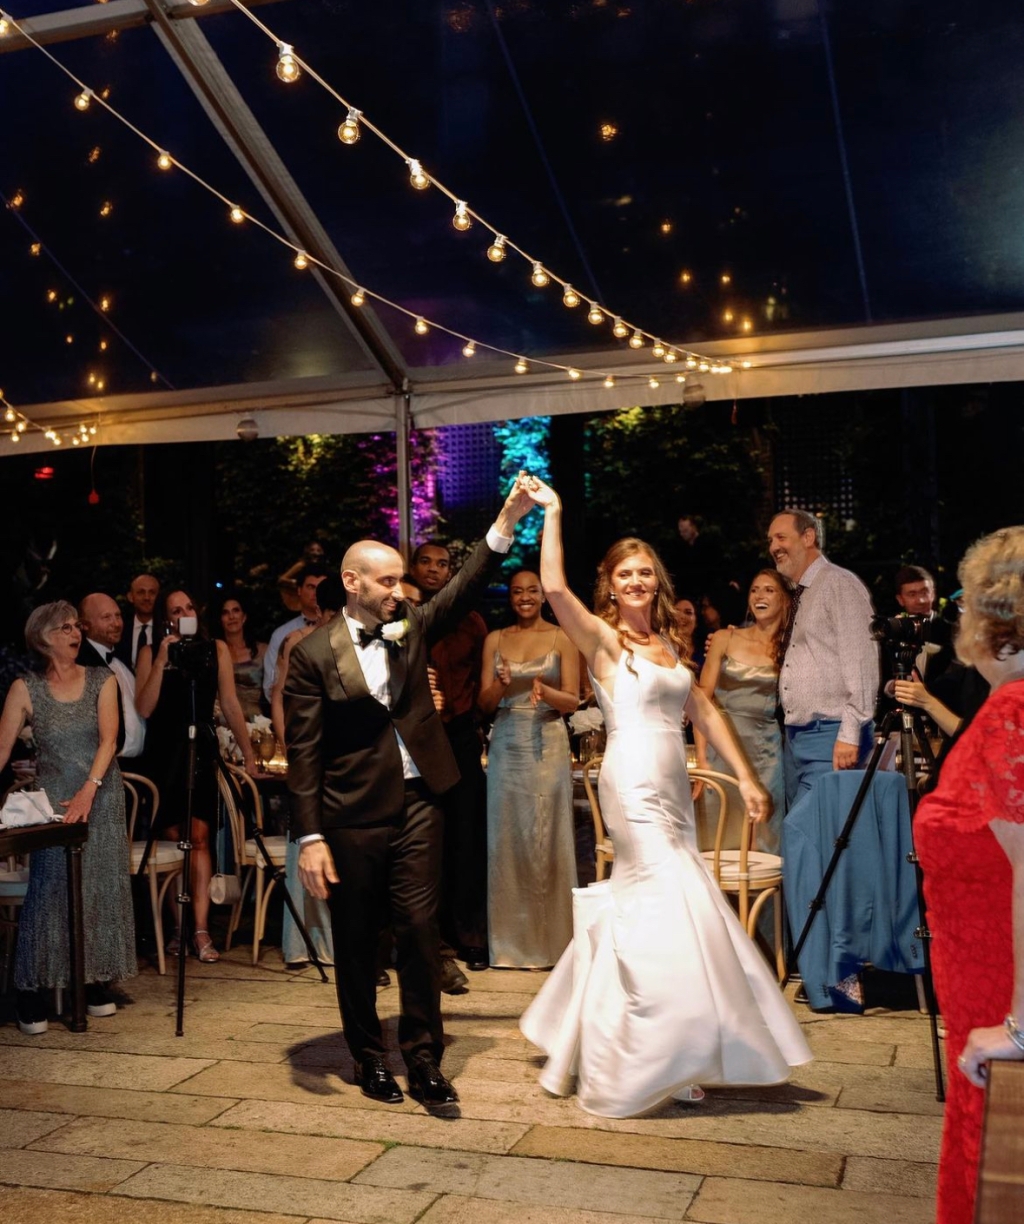 THE WEDDING DANCE